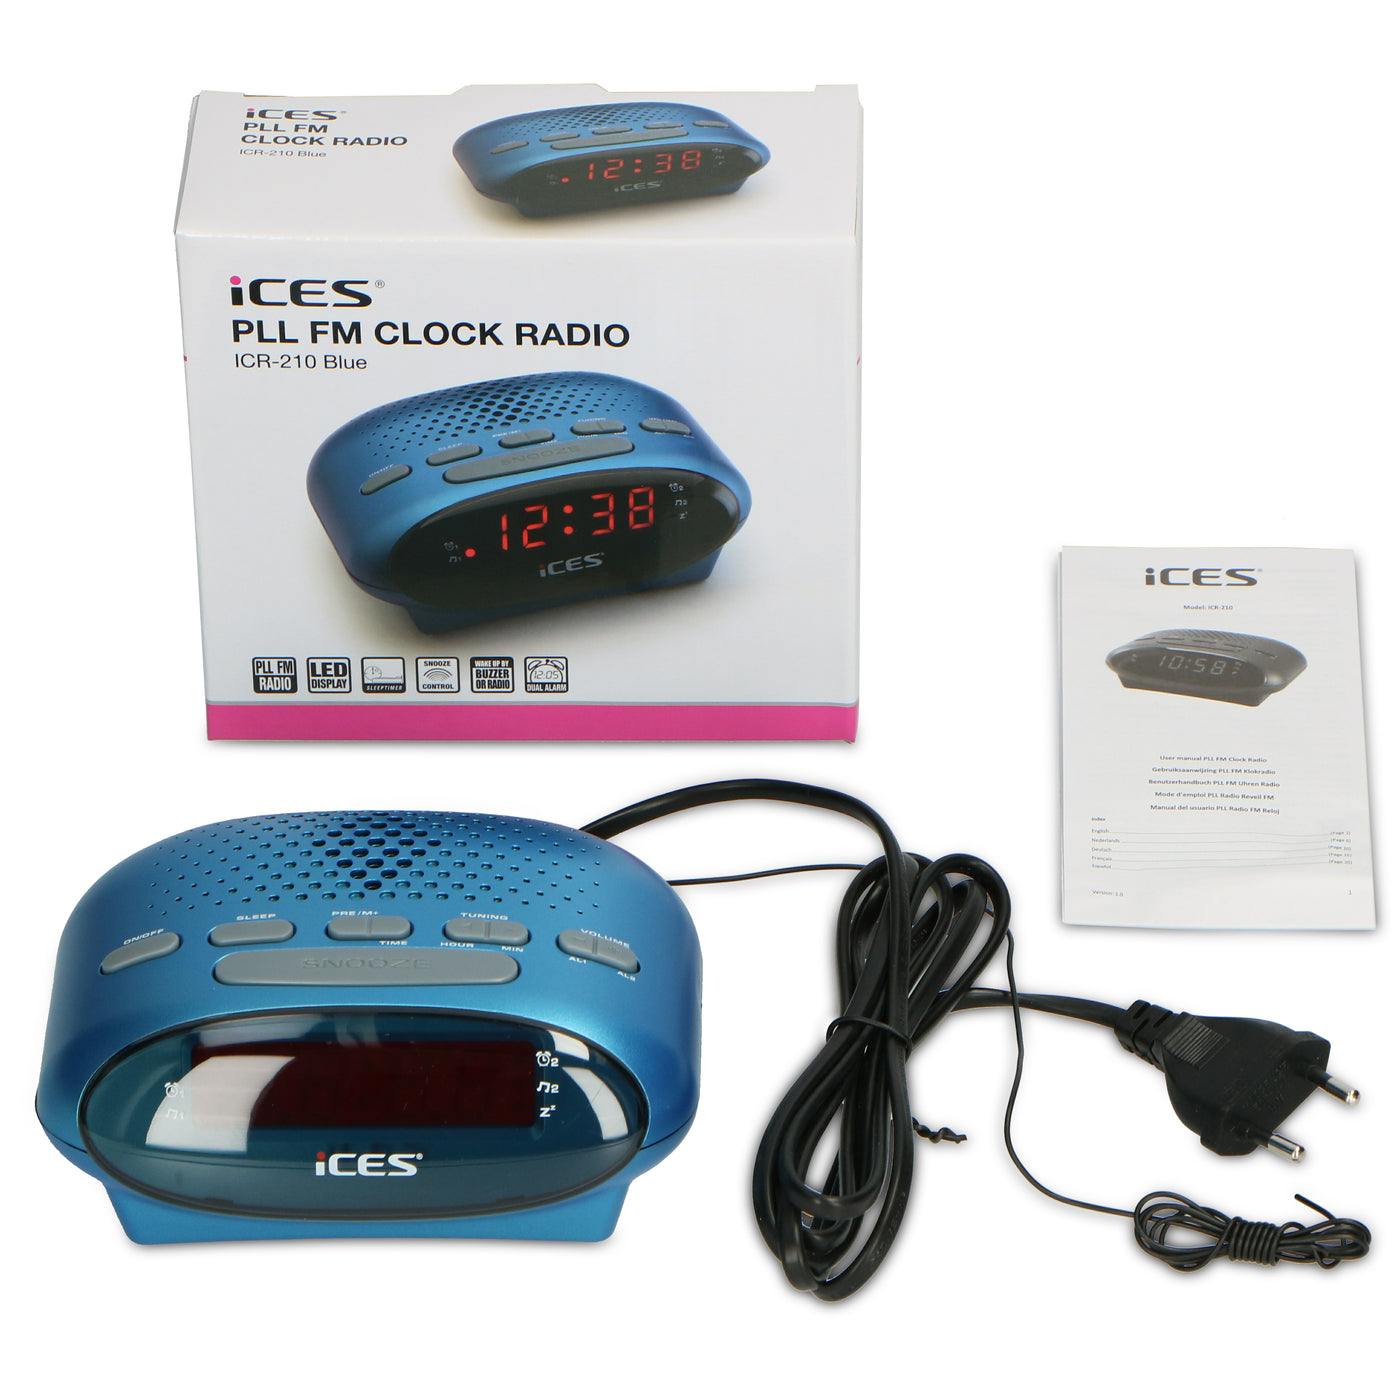 Ices ICR-210 Blue - FM Clock radio